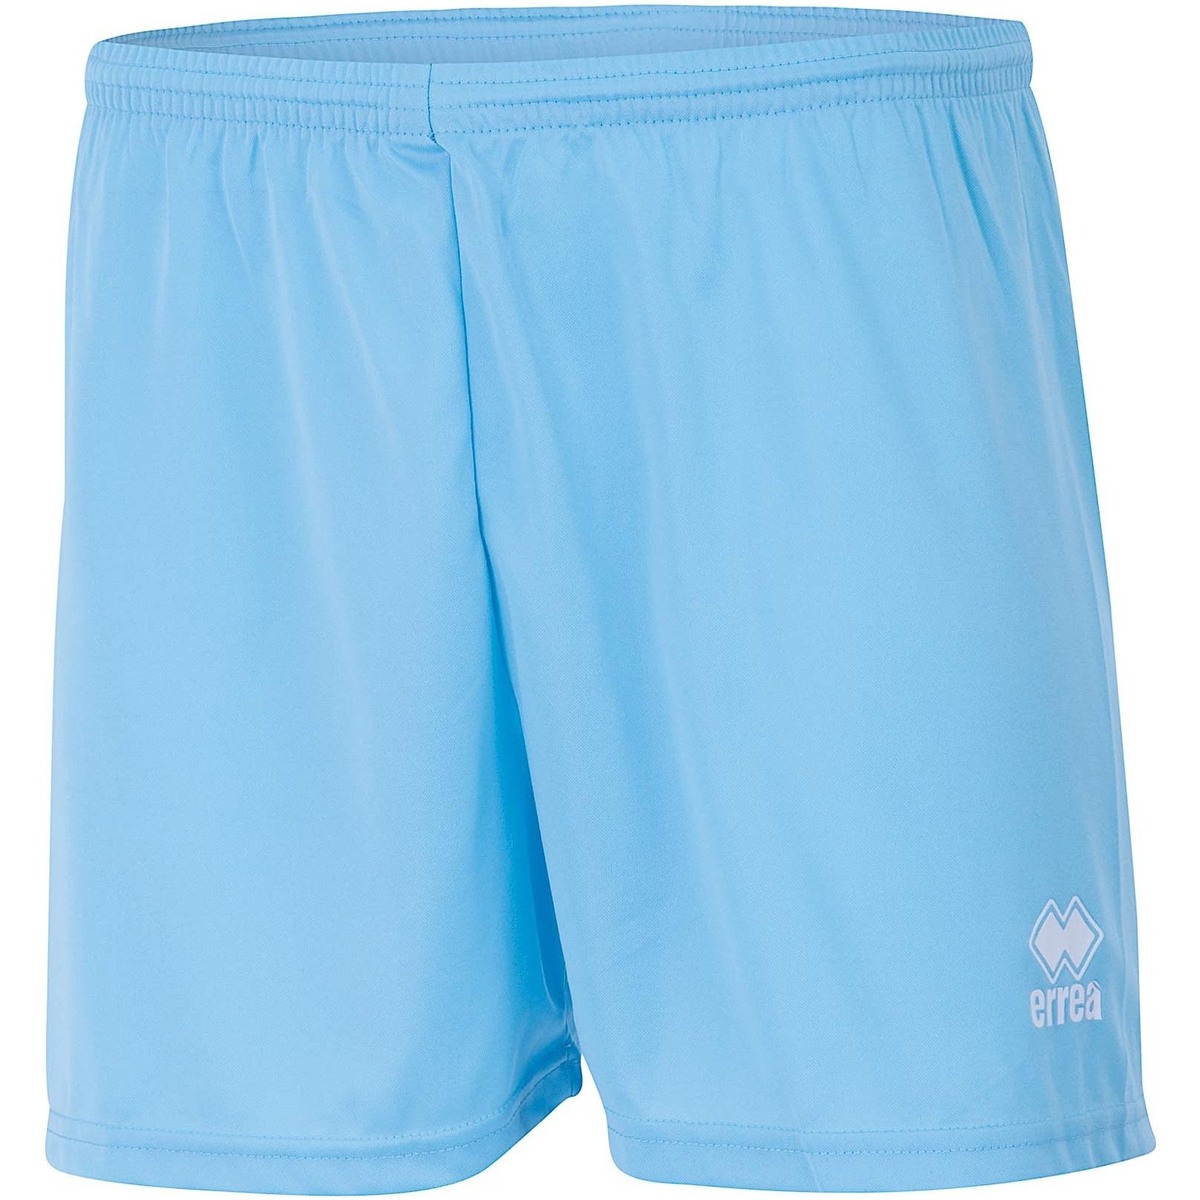 Kleidung Jungen Shorts / Bermudas Errea Pantaloni Corti  New Skin Panta Jr Celeste Marine